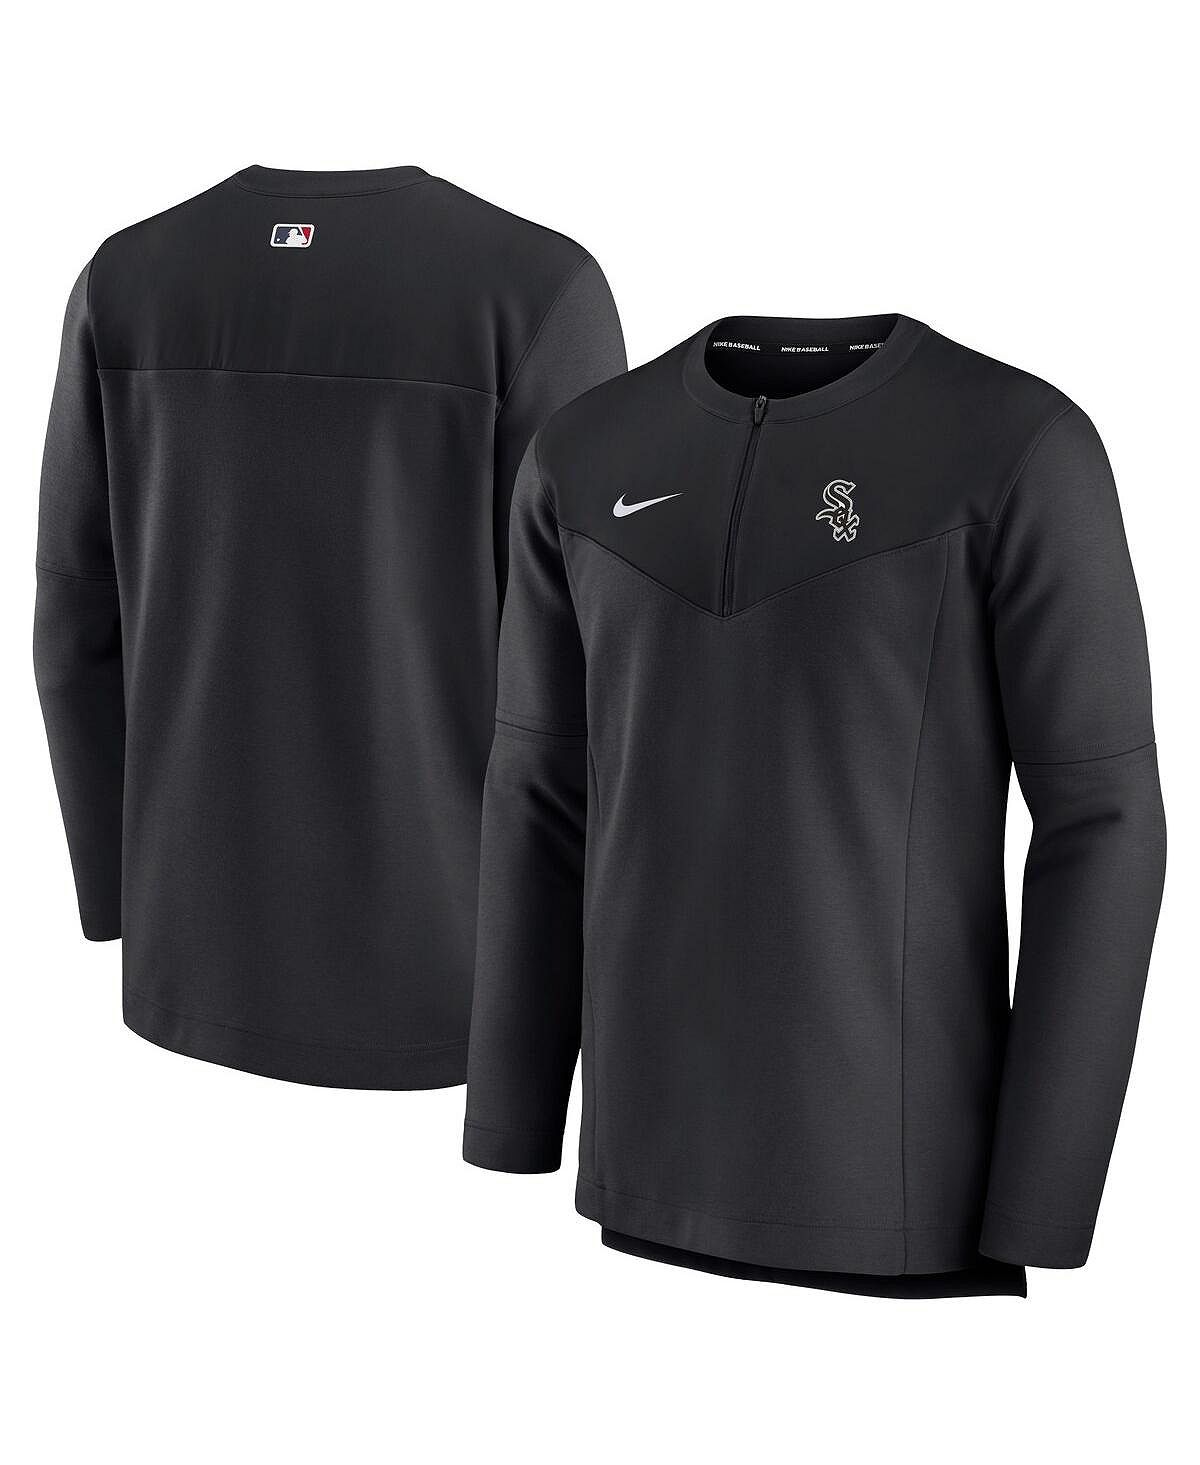 Мужская футболка с молнией до половины длины черного цвета Chicago White Sox Authentic Collection Game Time Performance Nike цена и фото